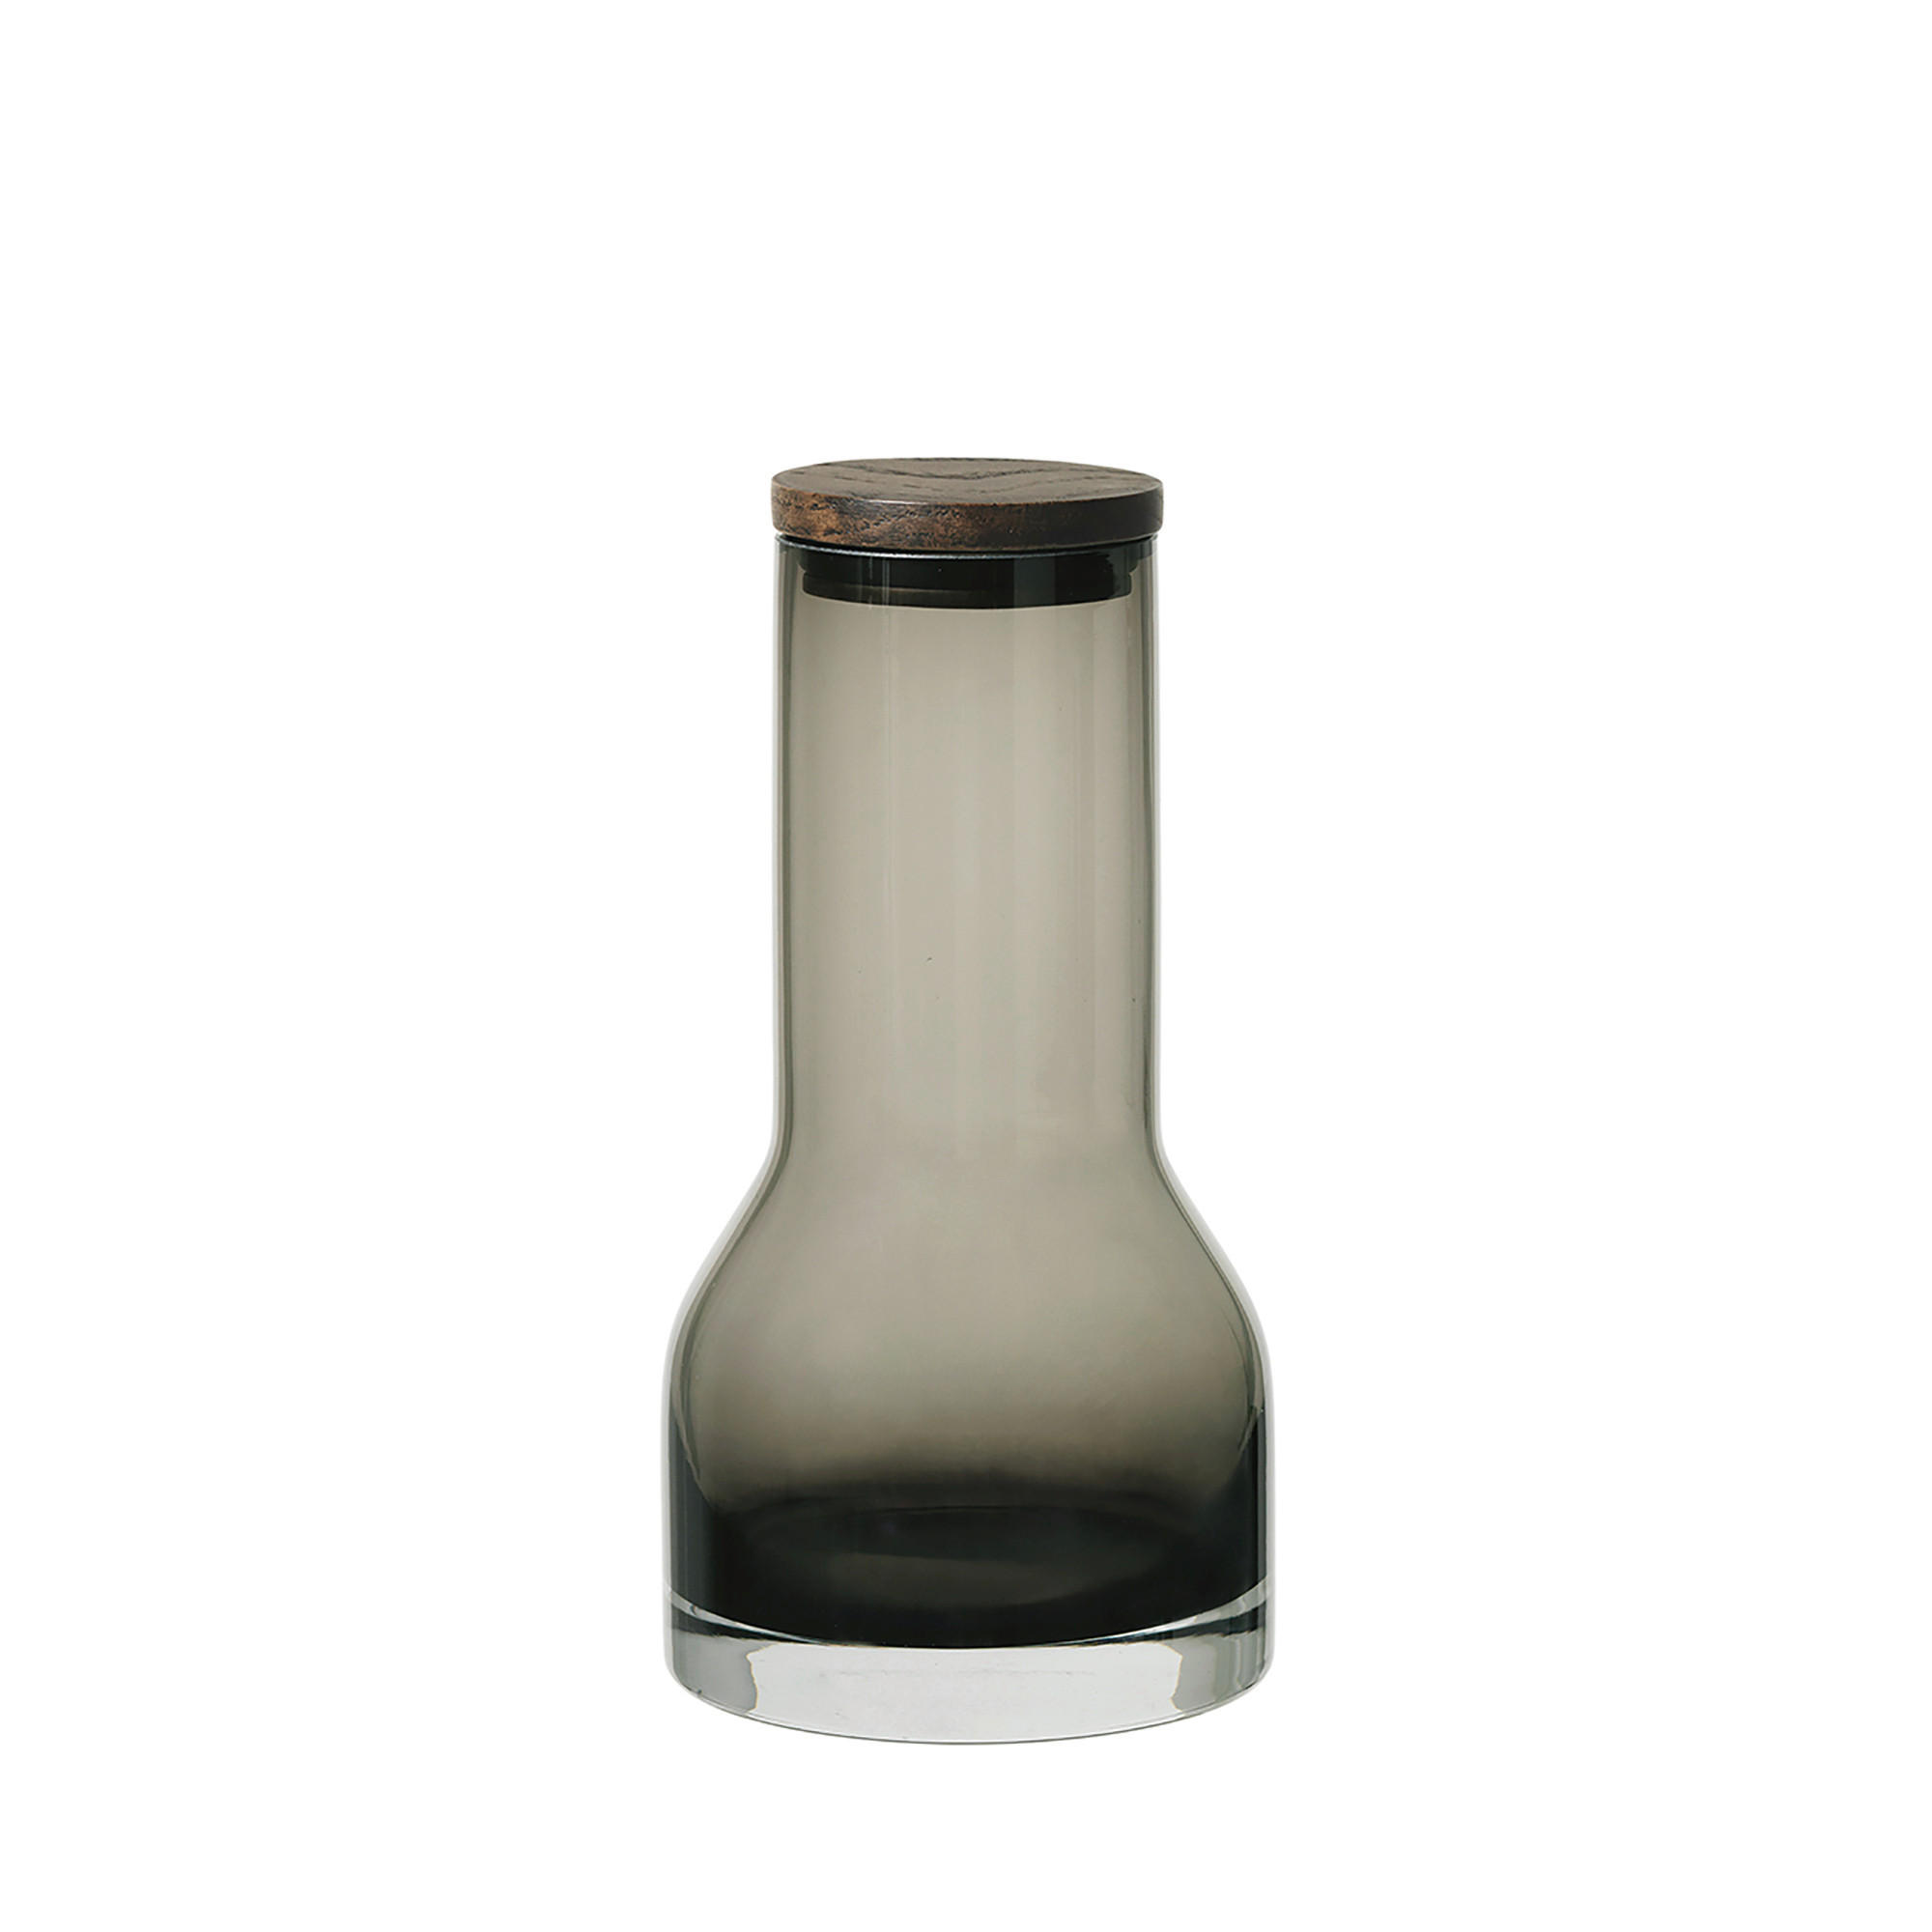 WASSERKARAFFE 0,65 L    - Grau, Design, Glas (10/19,5cm) - Blomus